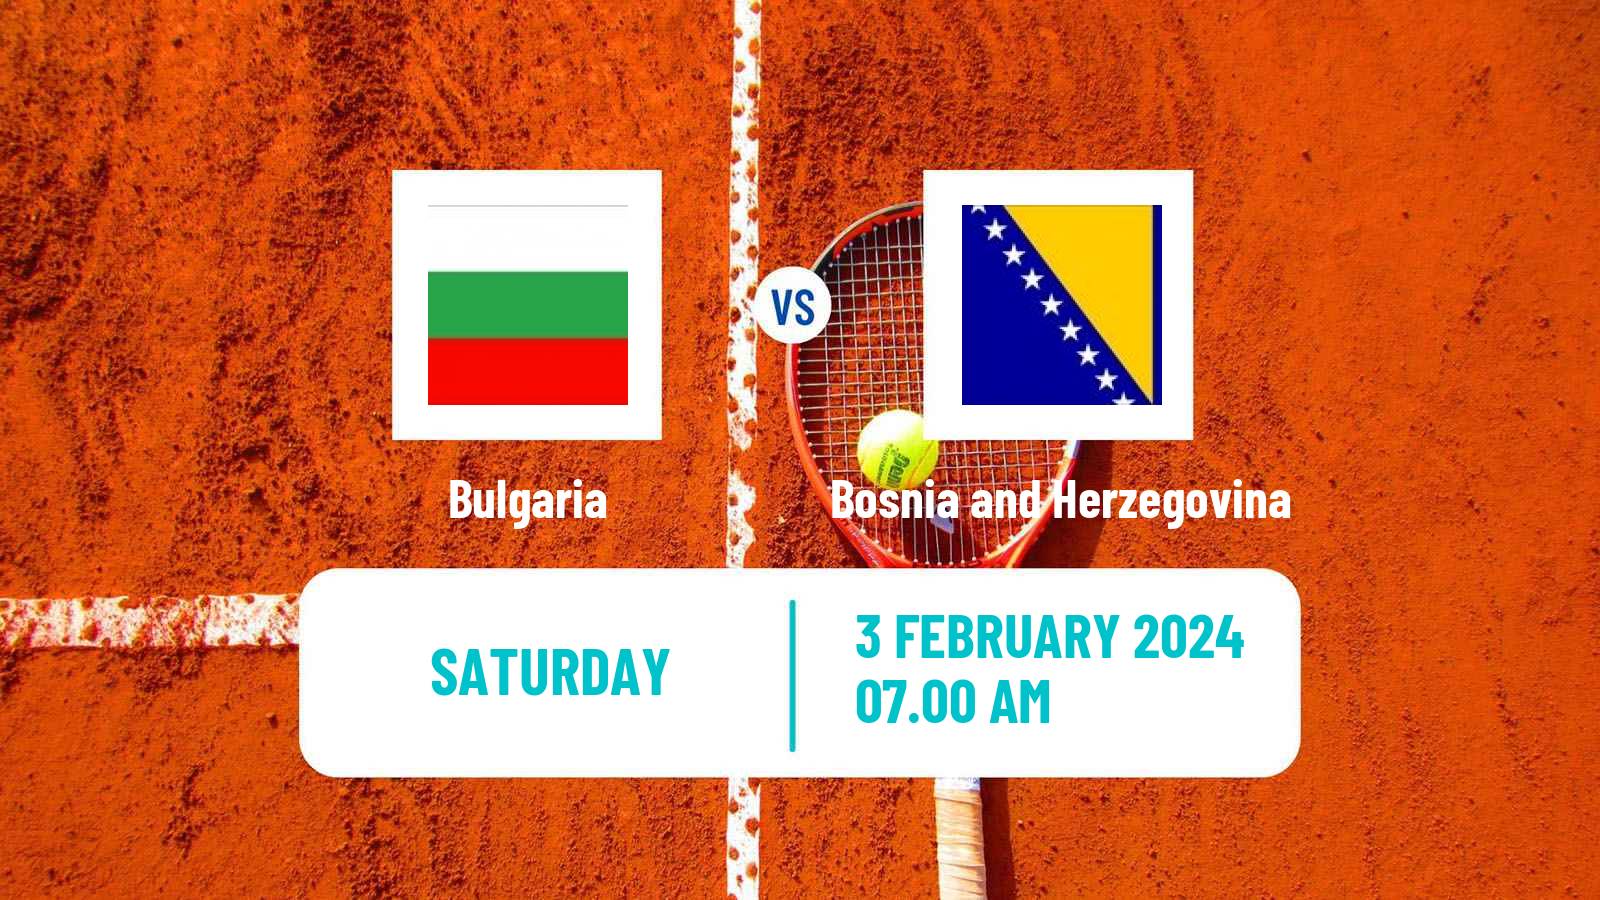 Tennis Davis Cup World Group I Teams Bulgaria - Bosnia and Herzegovina